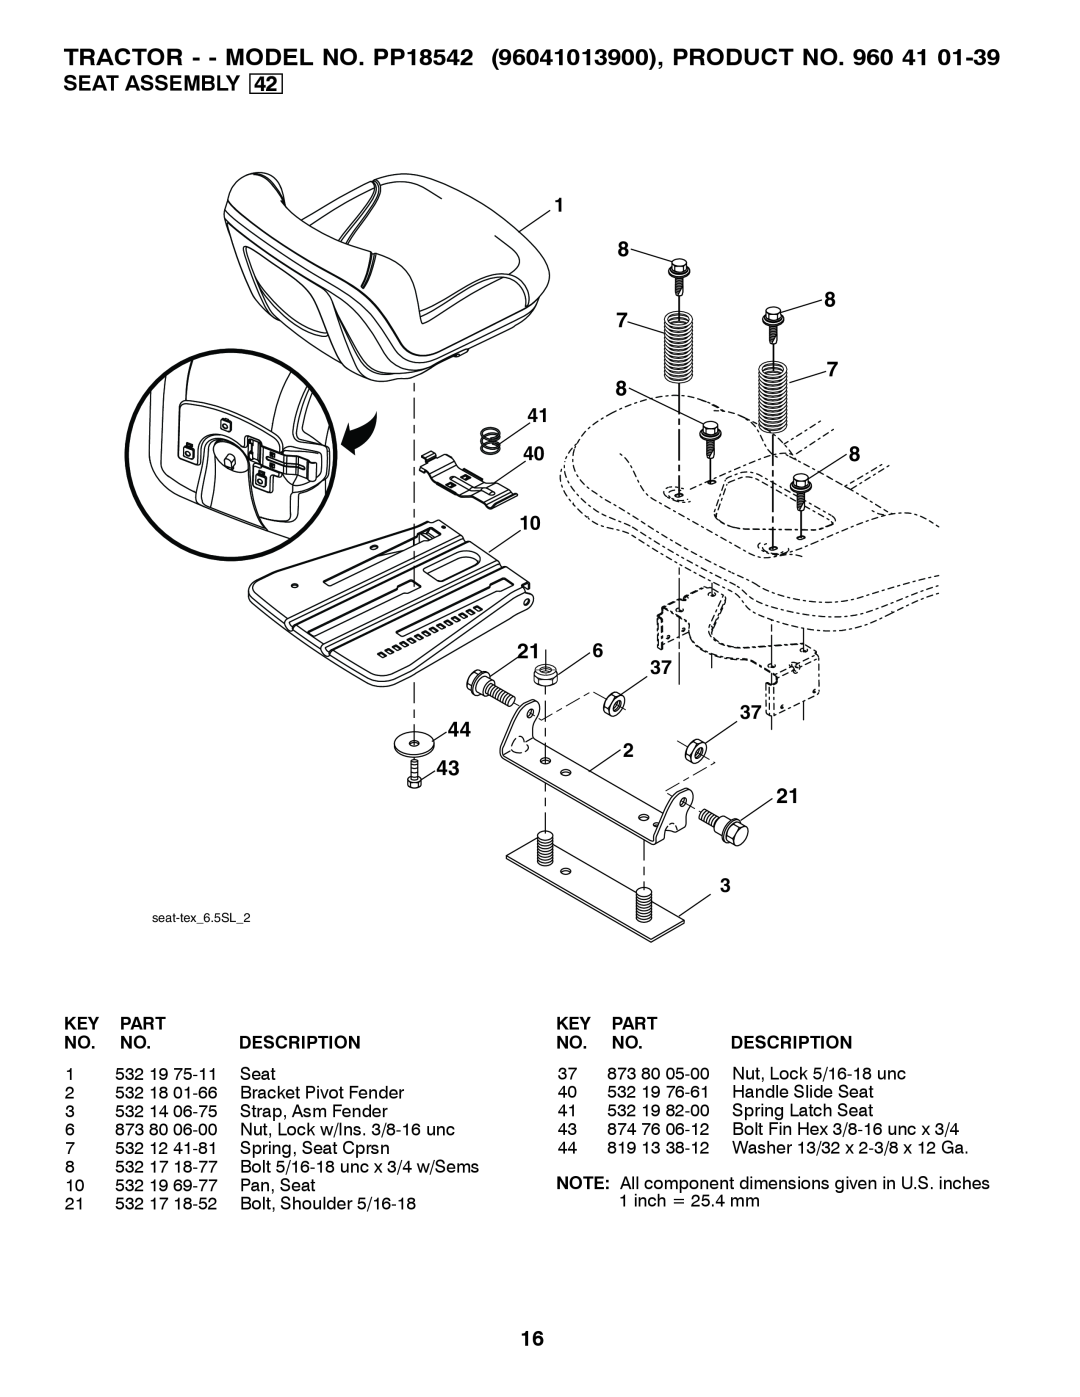 Poulan manual Seat Assembly, 532 19, TRACTOR - - MODEL NO. PP18542 96041013900, PRODUCT NO. 960 41, Part, Description 